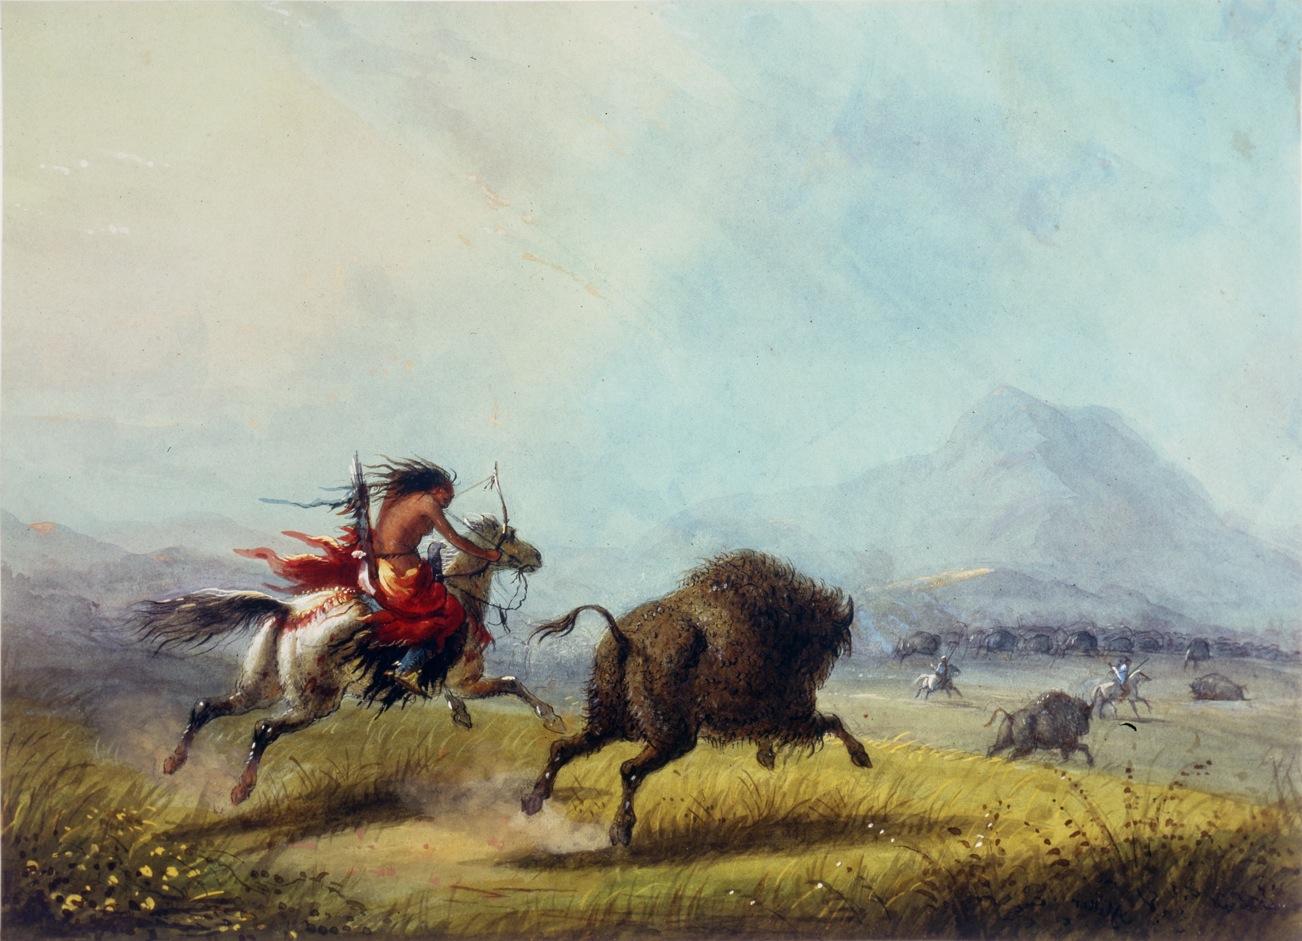 Buffalo Chase by a Female